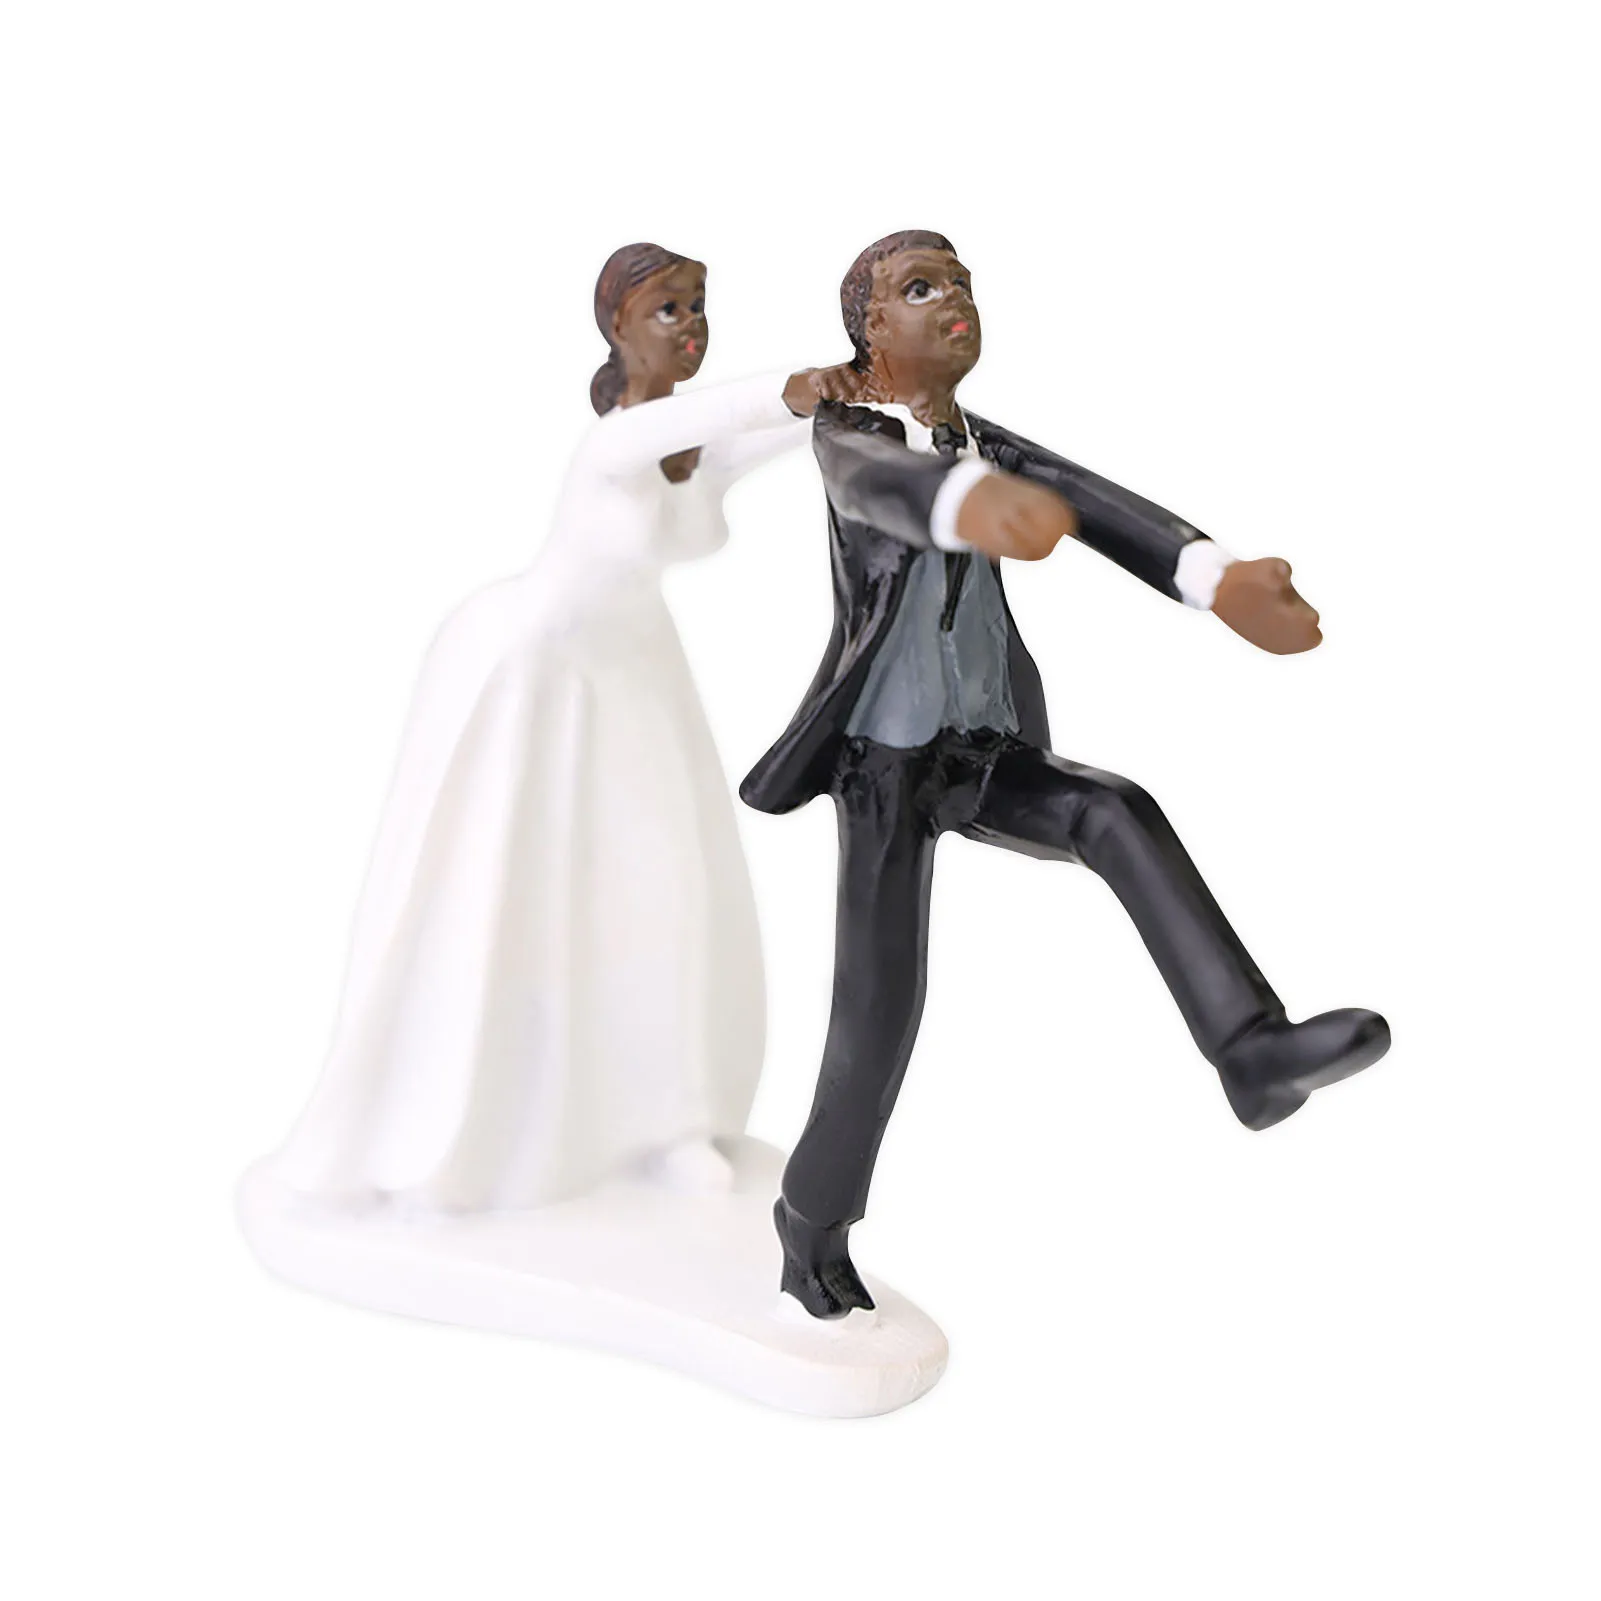 Wedding Cake Topper Figurine Loving Pinch Funny Humor Romantic Decor Home New 